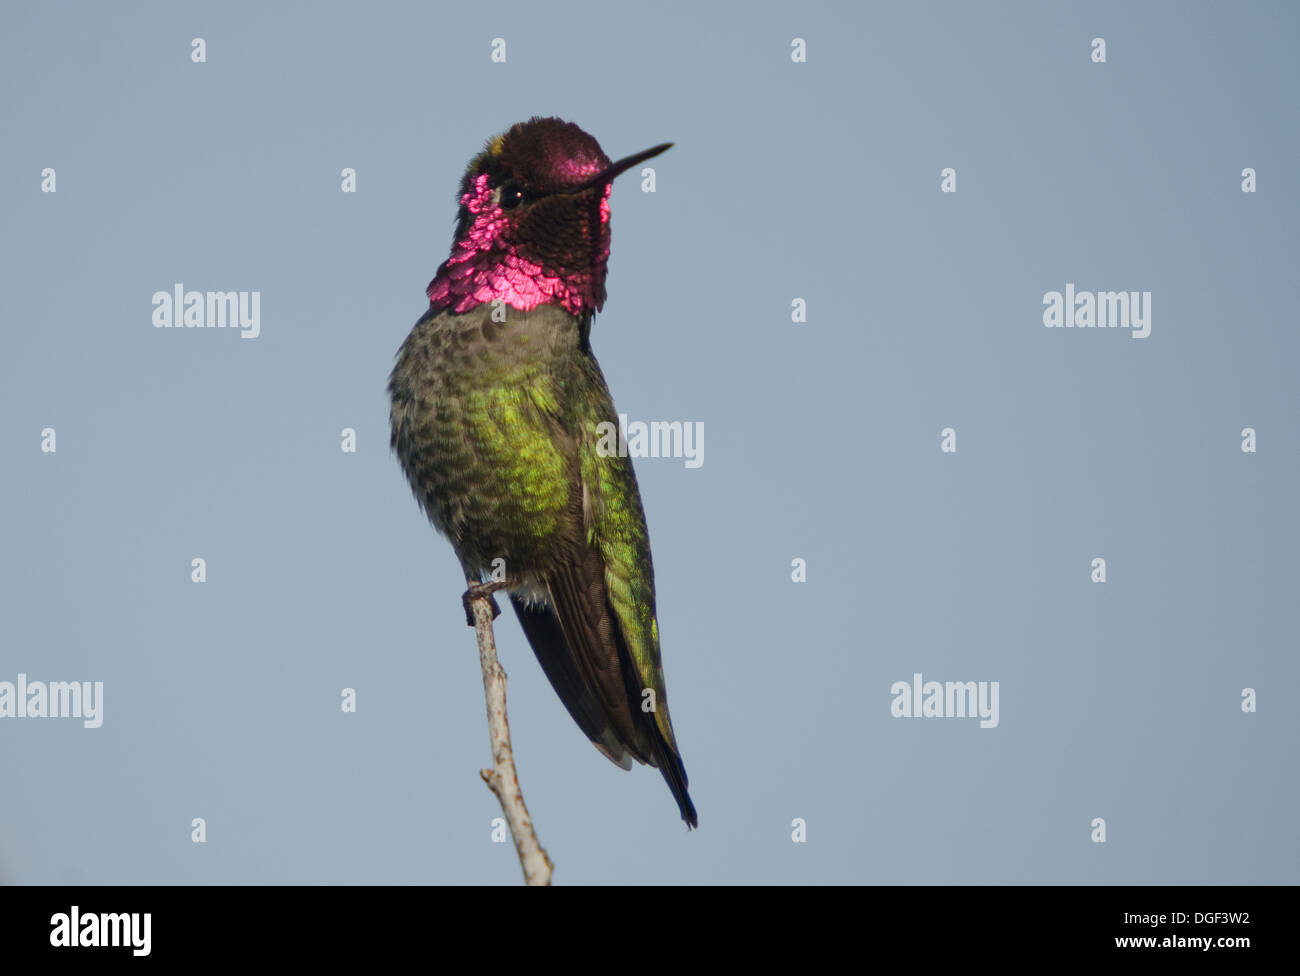 Male Anna's hummingbird against blue sky. Stock Photo